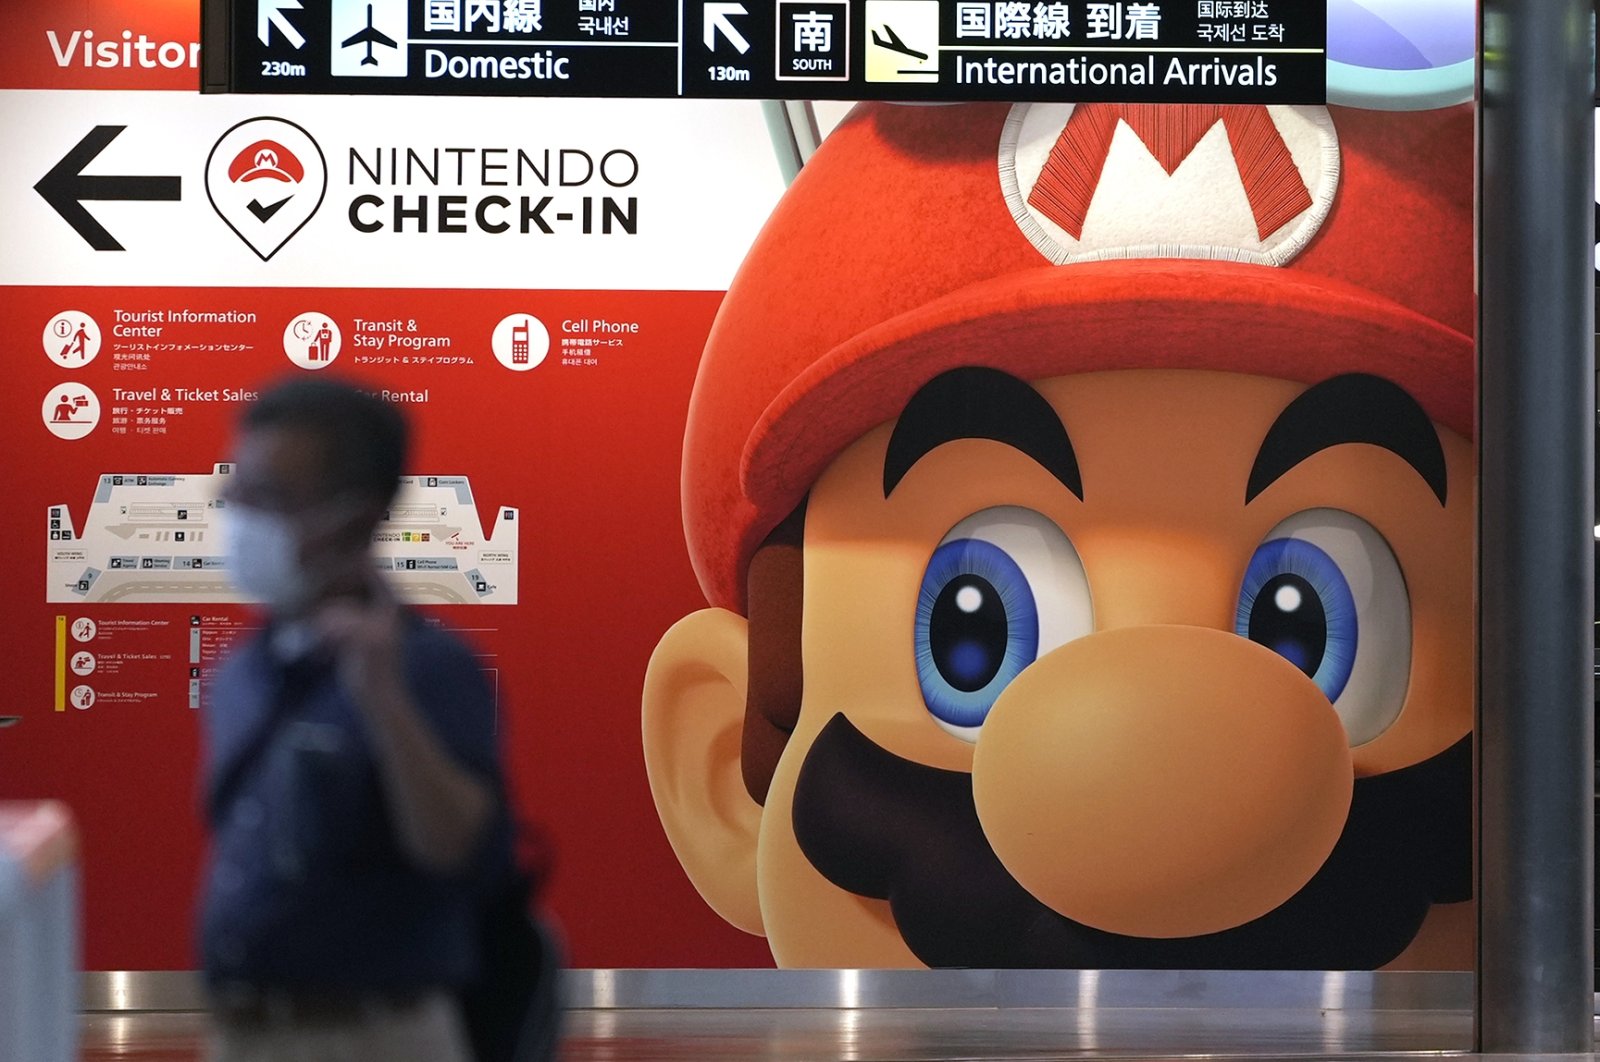 A traveler walks past an advertisement featuring a Nintendo character at Narita airport in Narita near Tokyo, Japan, June 10, 2022. (AP Photo)